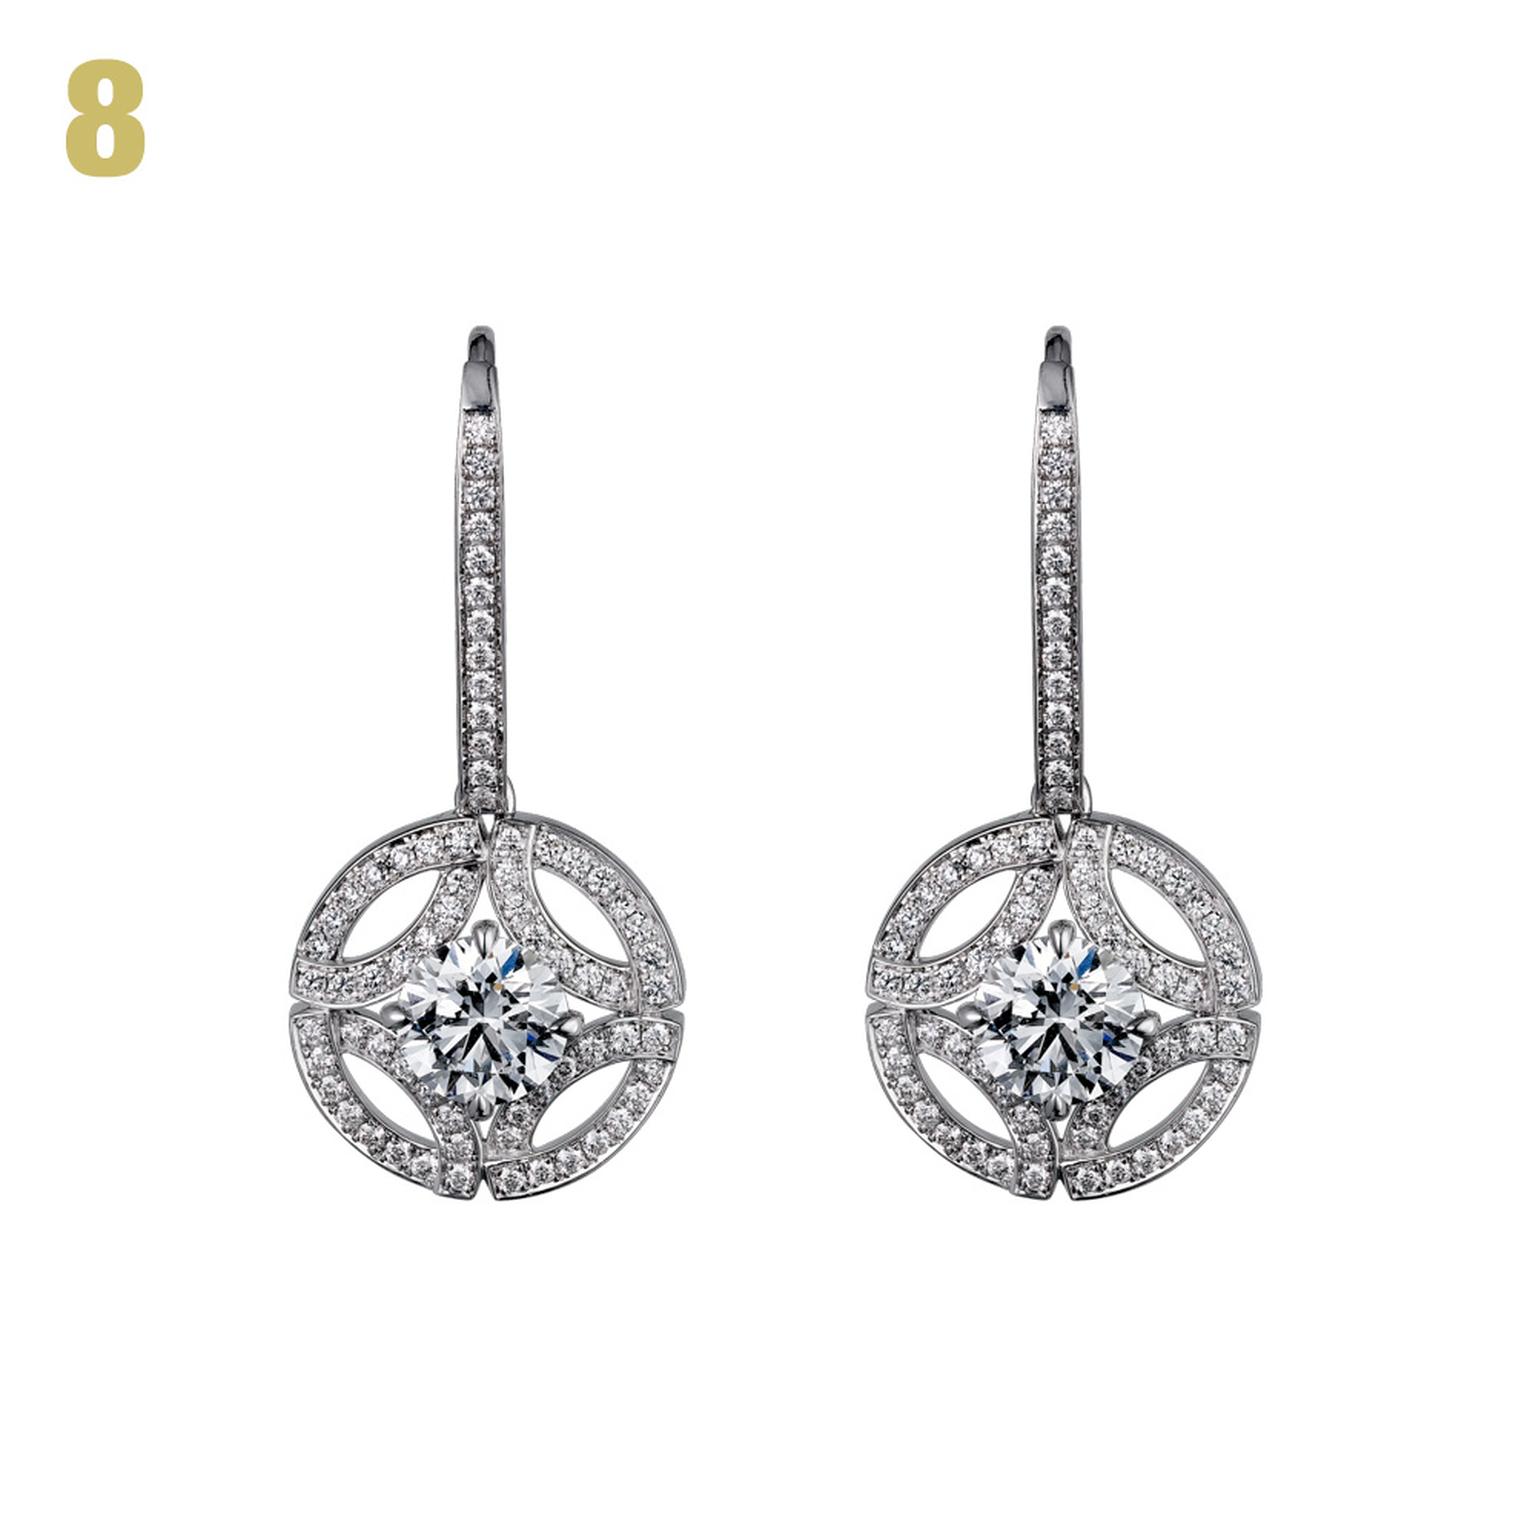 Galanterie de Cartier diamond earrings